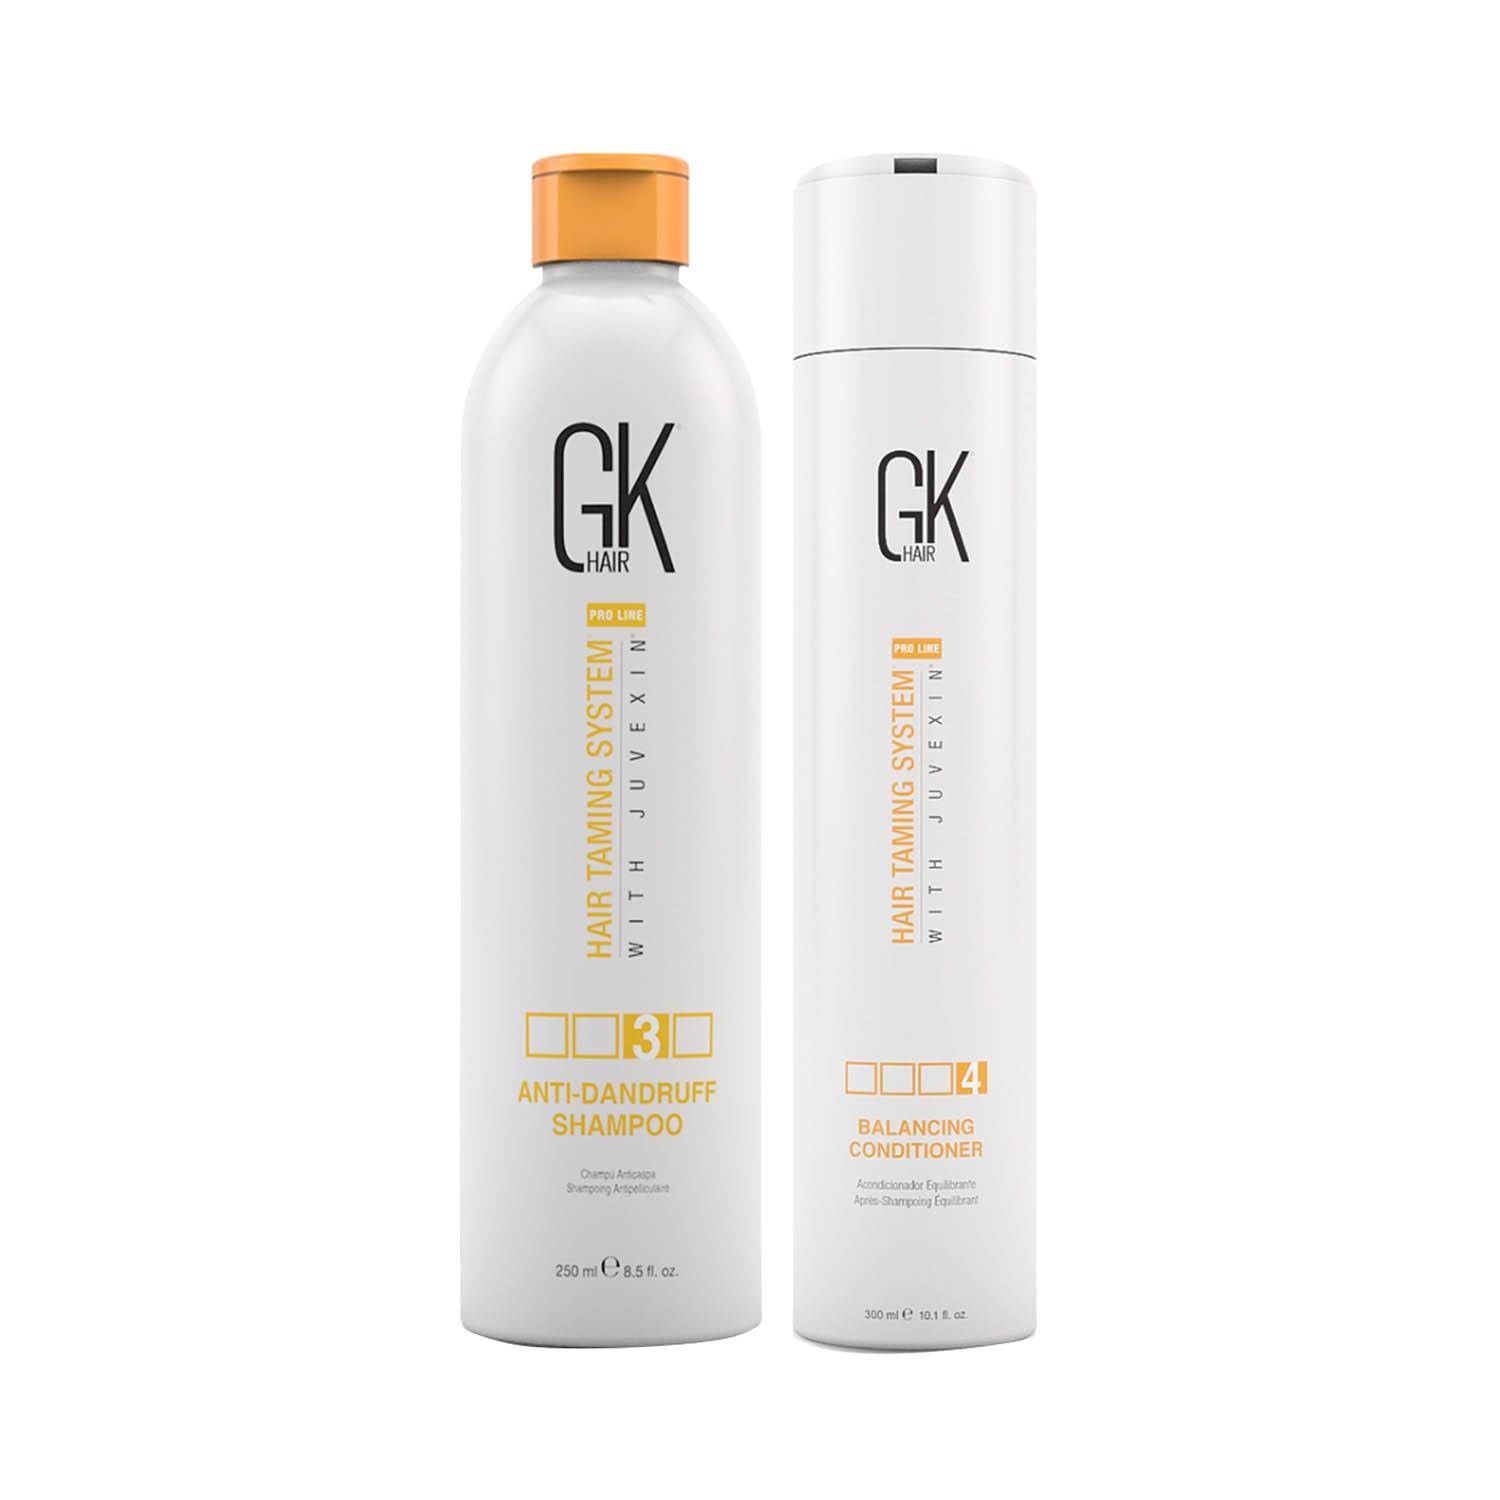 GK Hair | GK Hair Anti Dandruff Shampoo 250ml with Balancing Conditioner 300ml